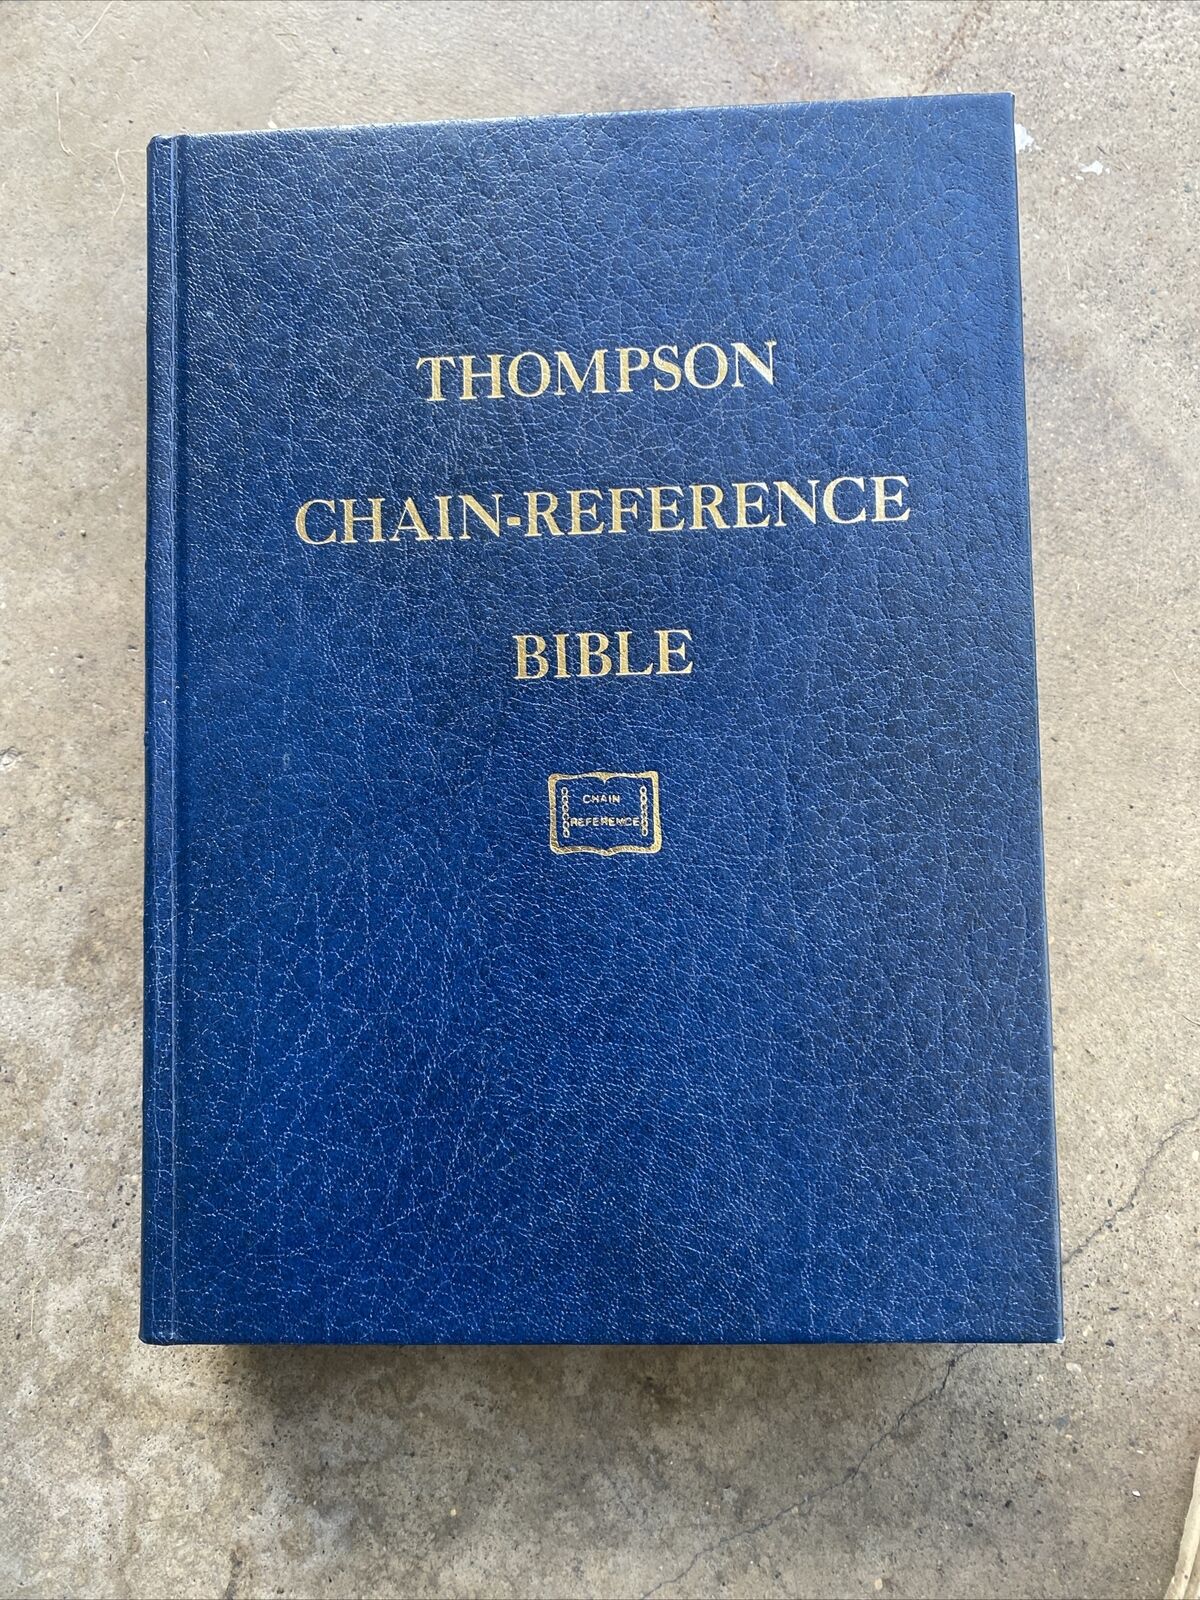 thompson chain reference bible kjv 1964